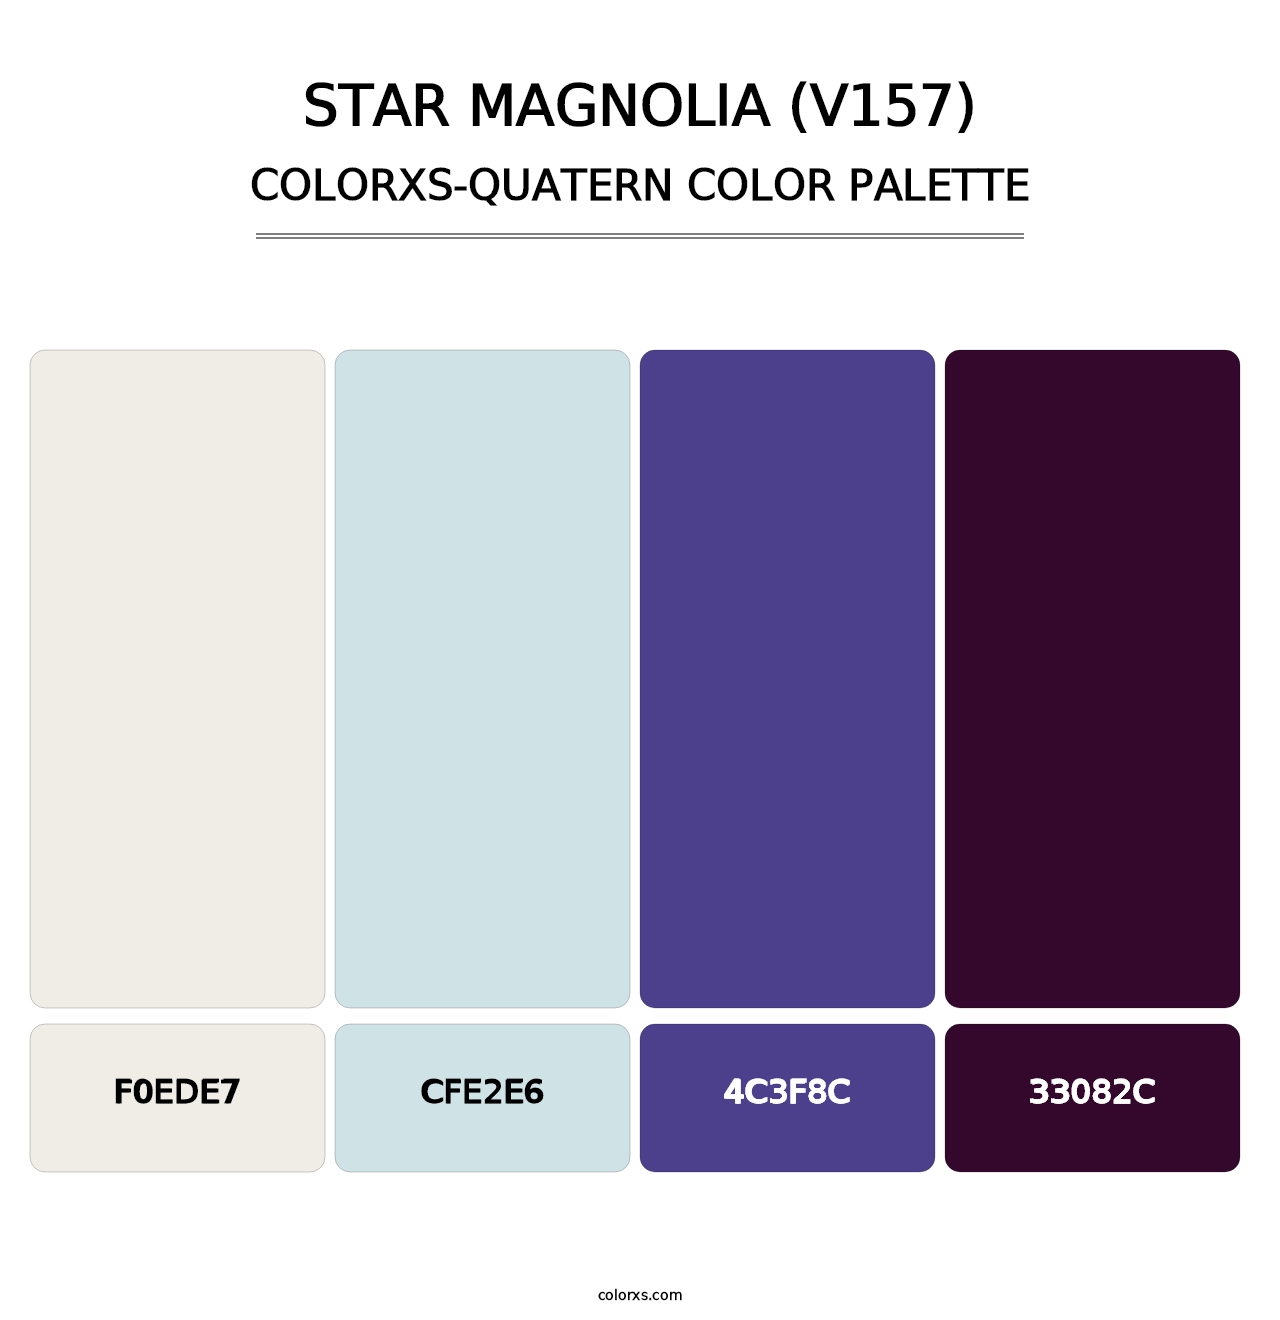 Star Magnolia (V157) - Colorxs Quatern Palette